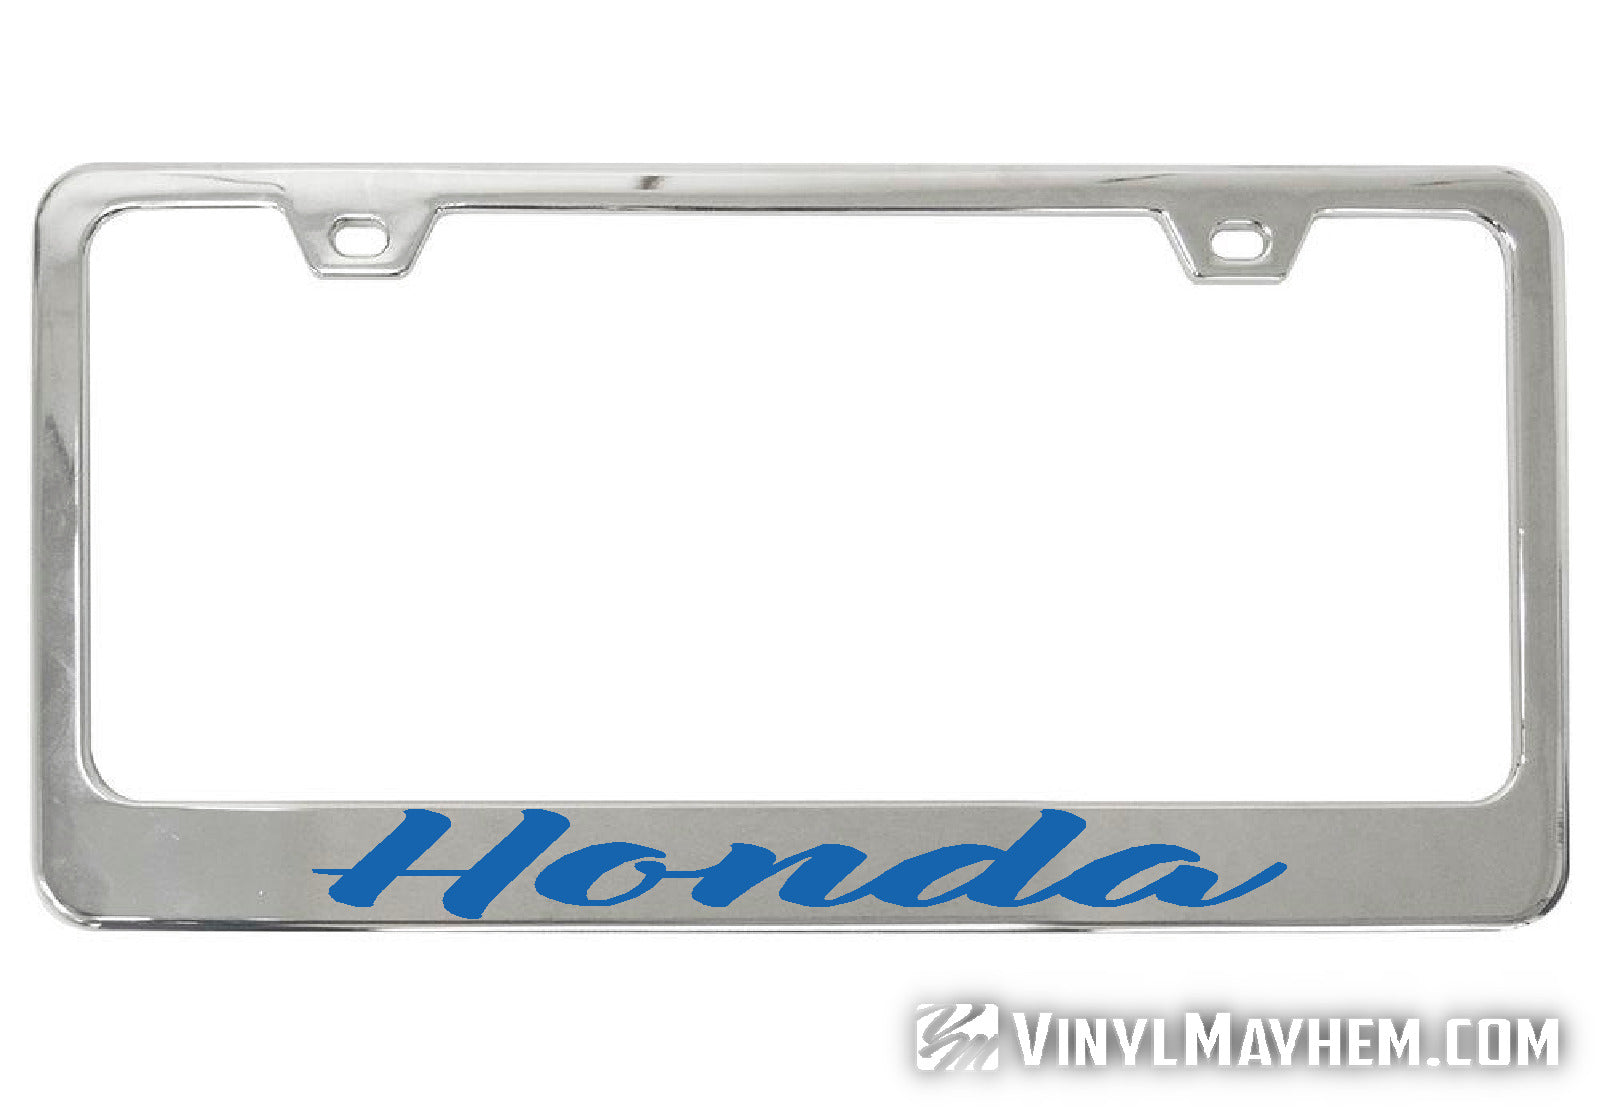 Honda chrome license plate frame